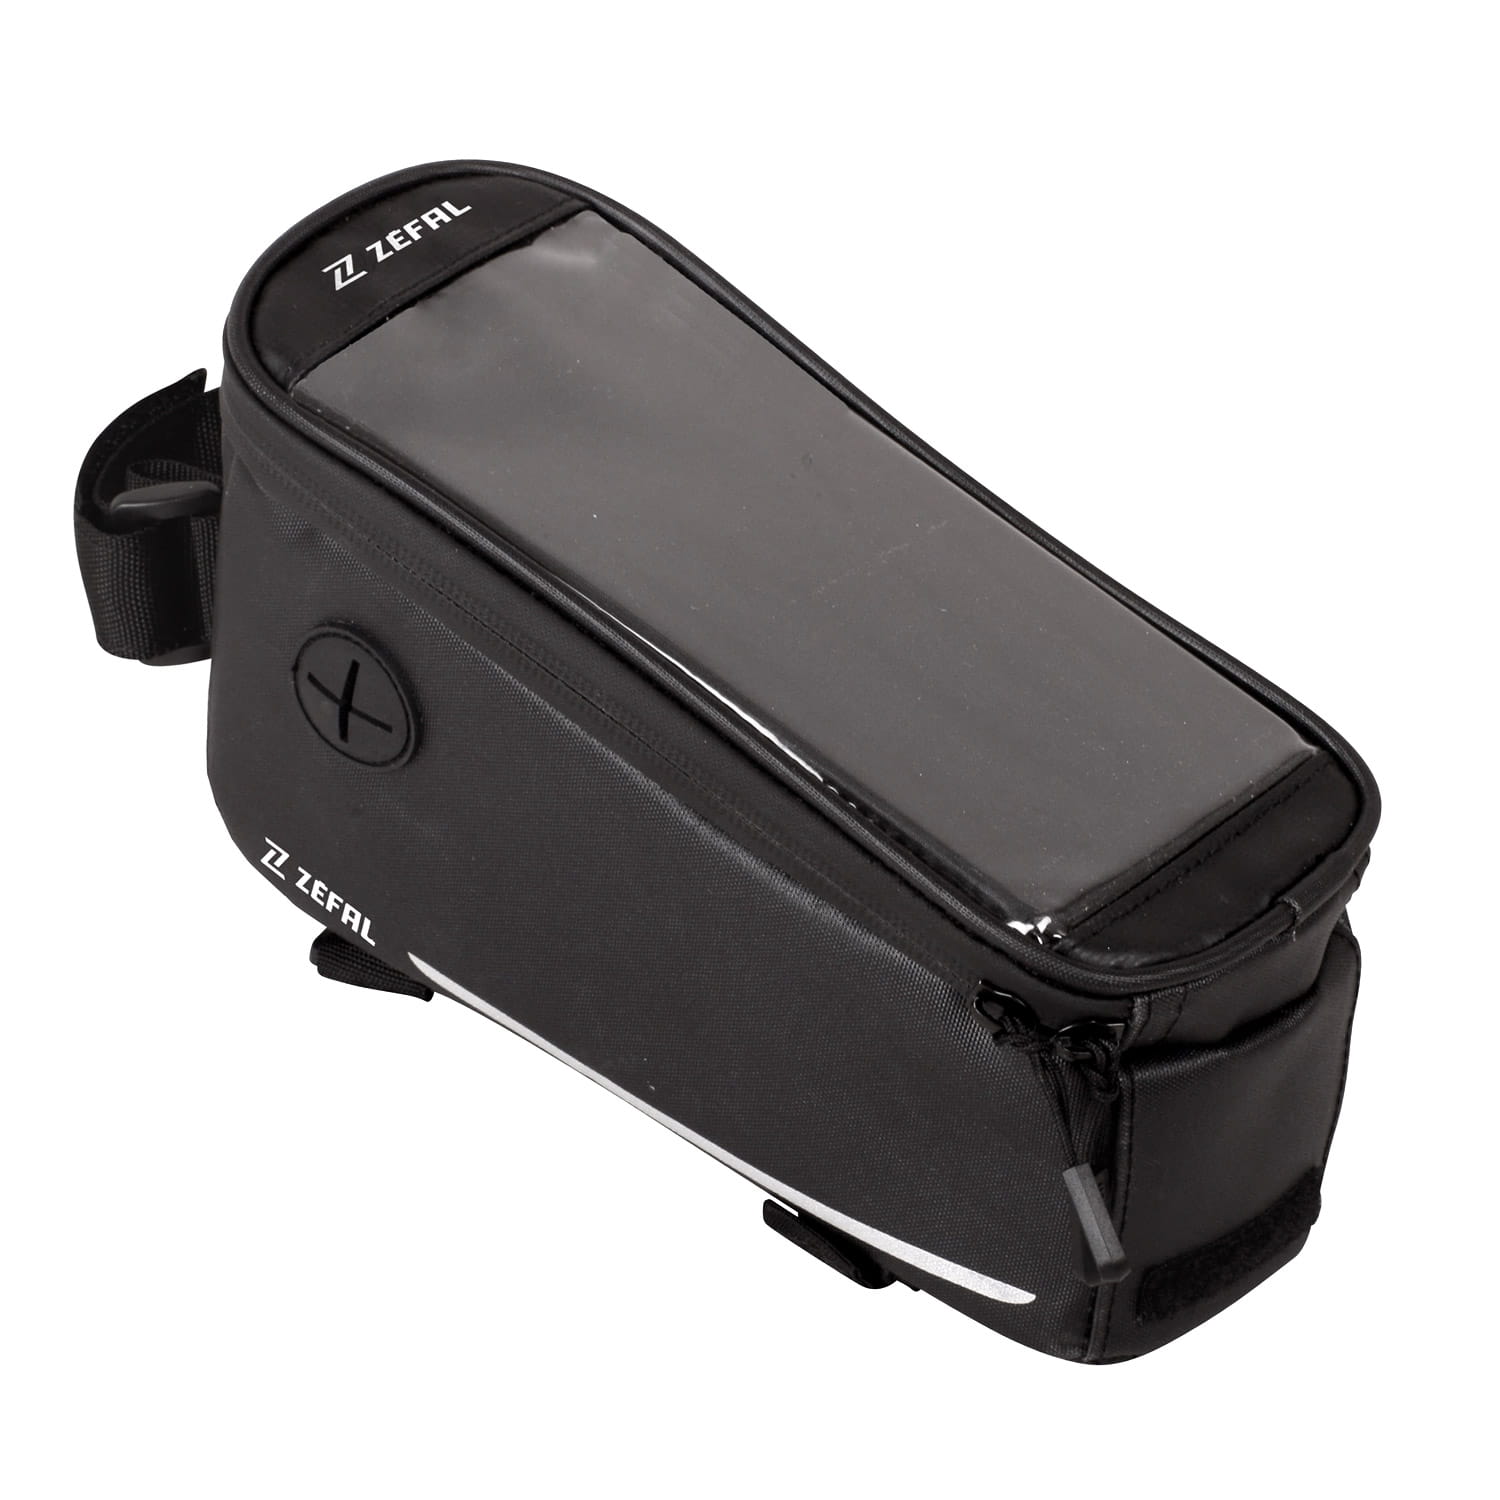 Zefal Console Pack T1/T2 Smartphone Oberrohrtasche